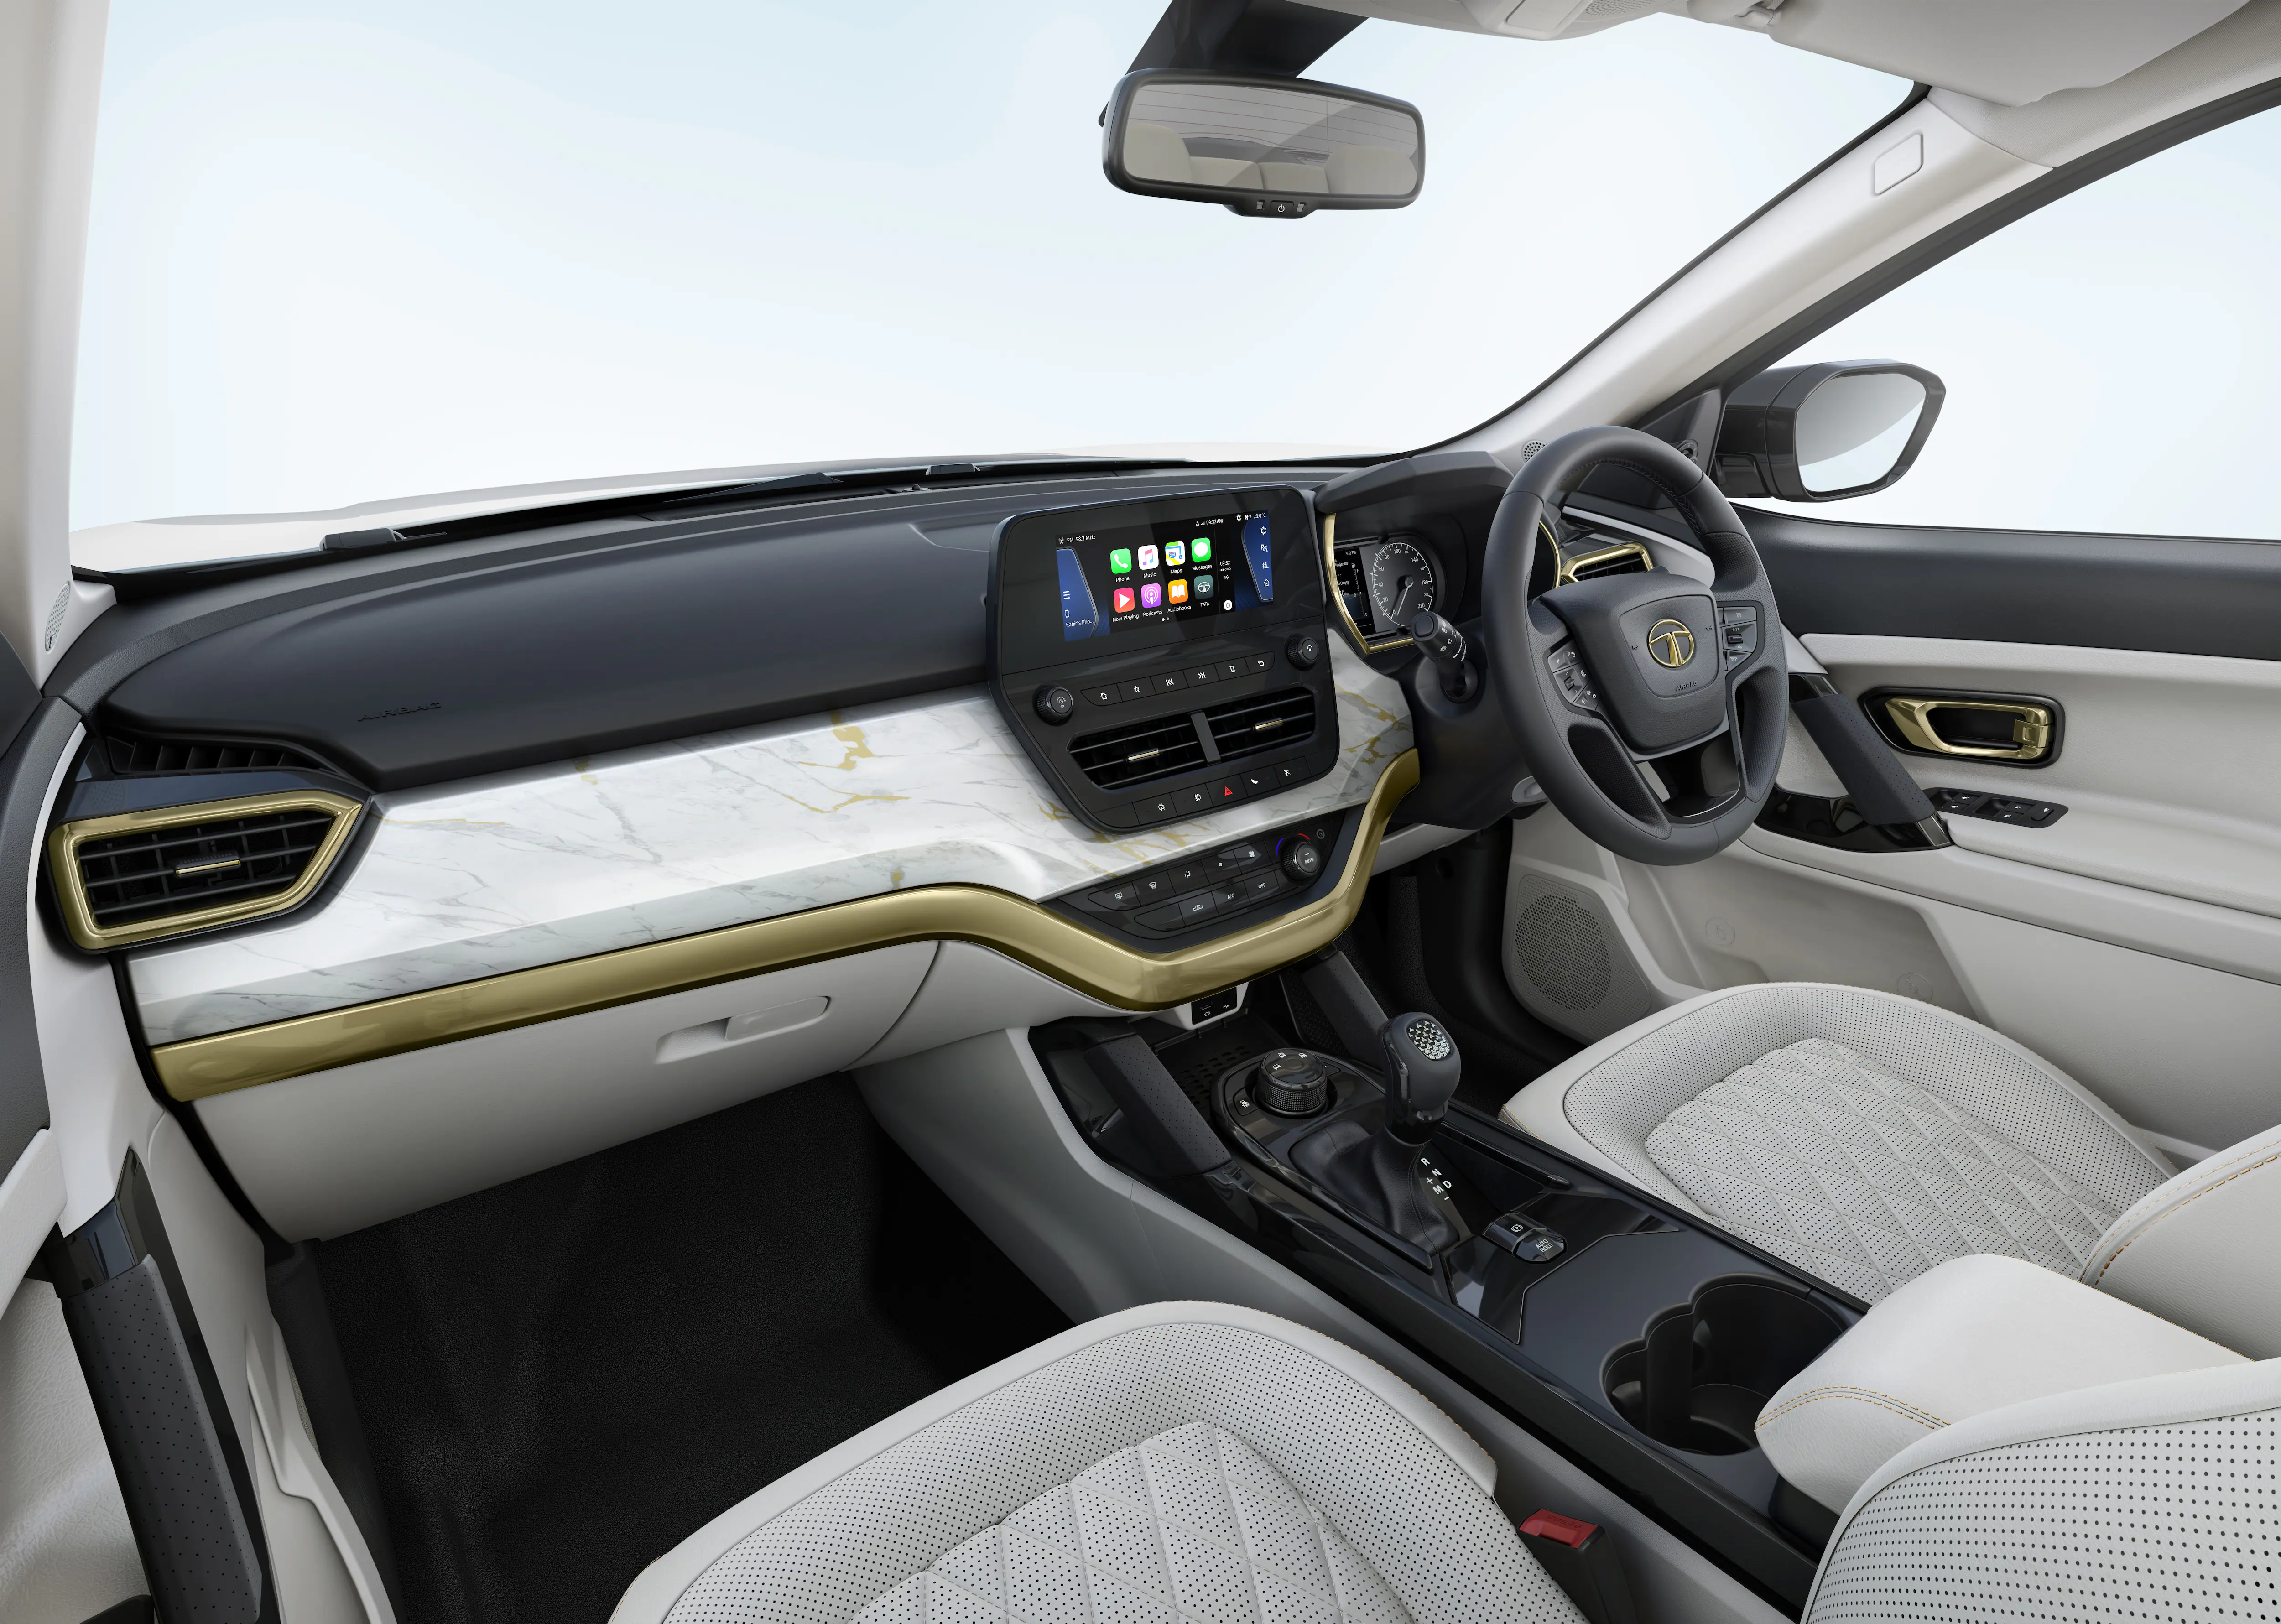 Tata Safari interior - Cockpit